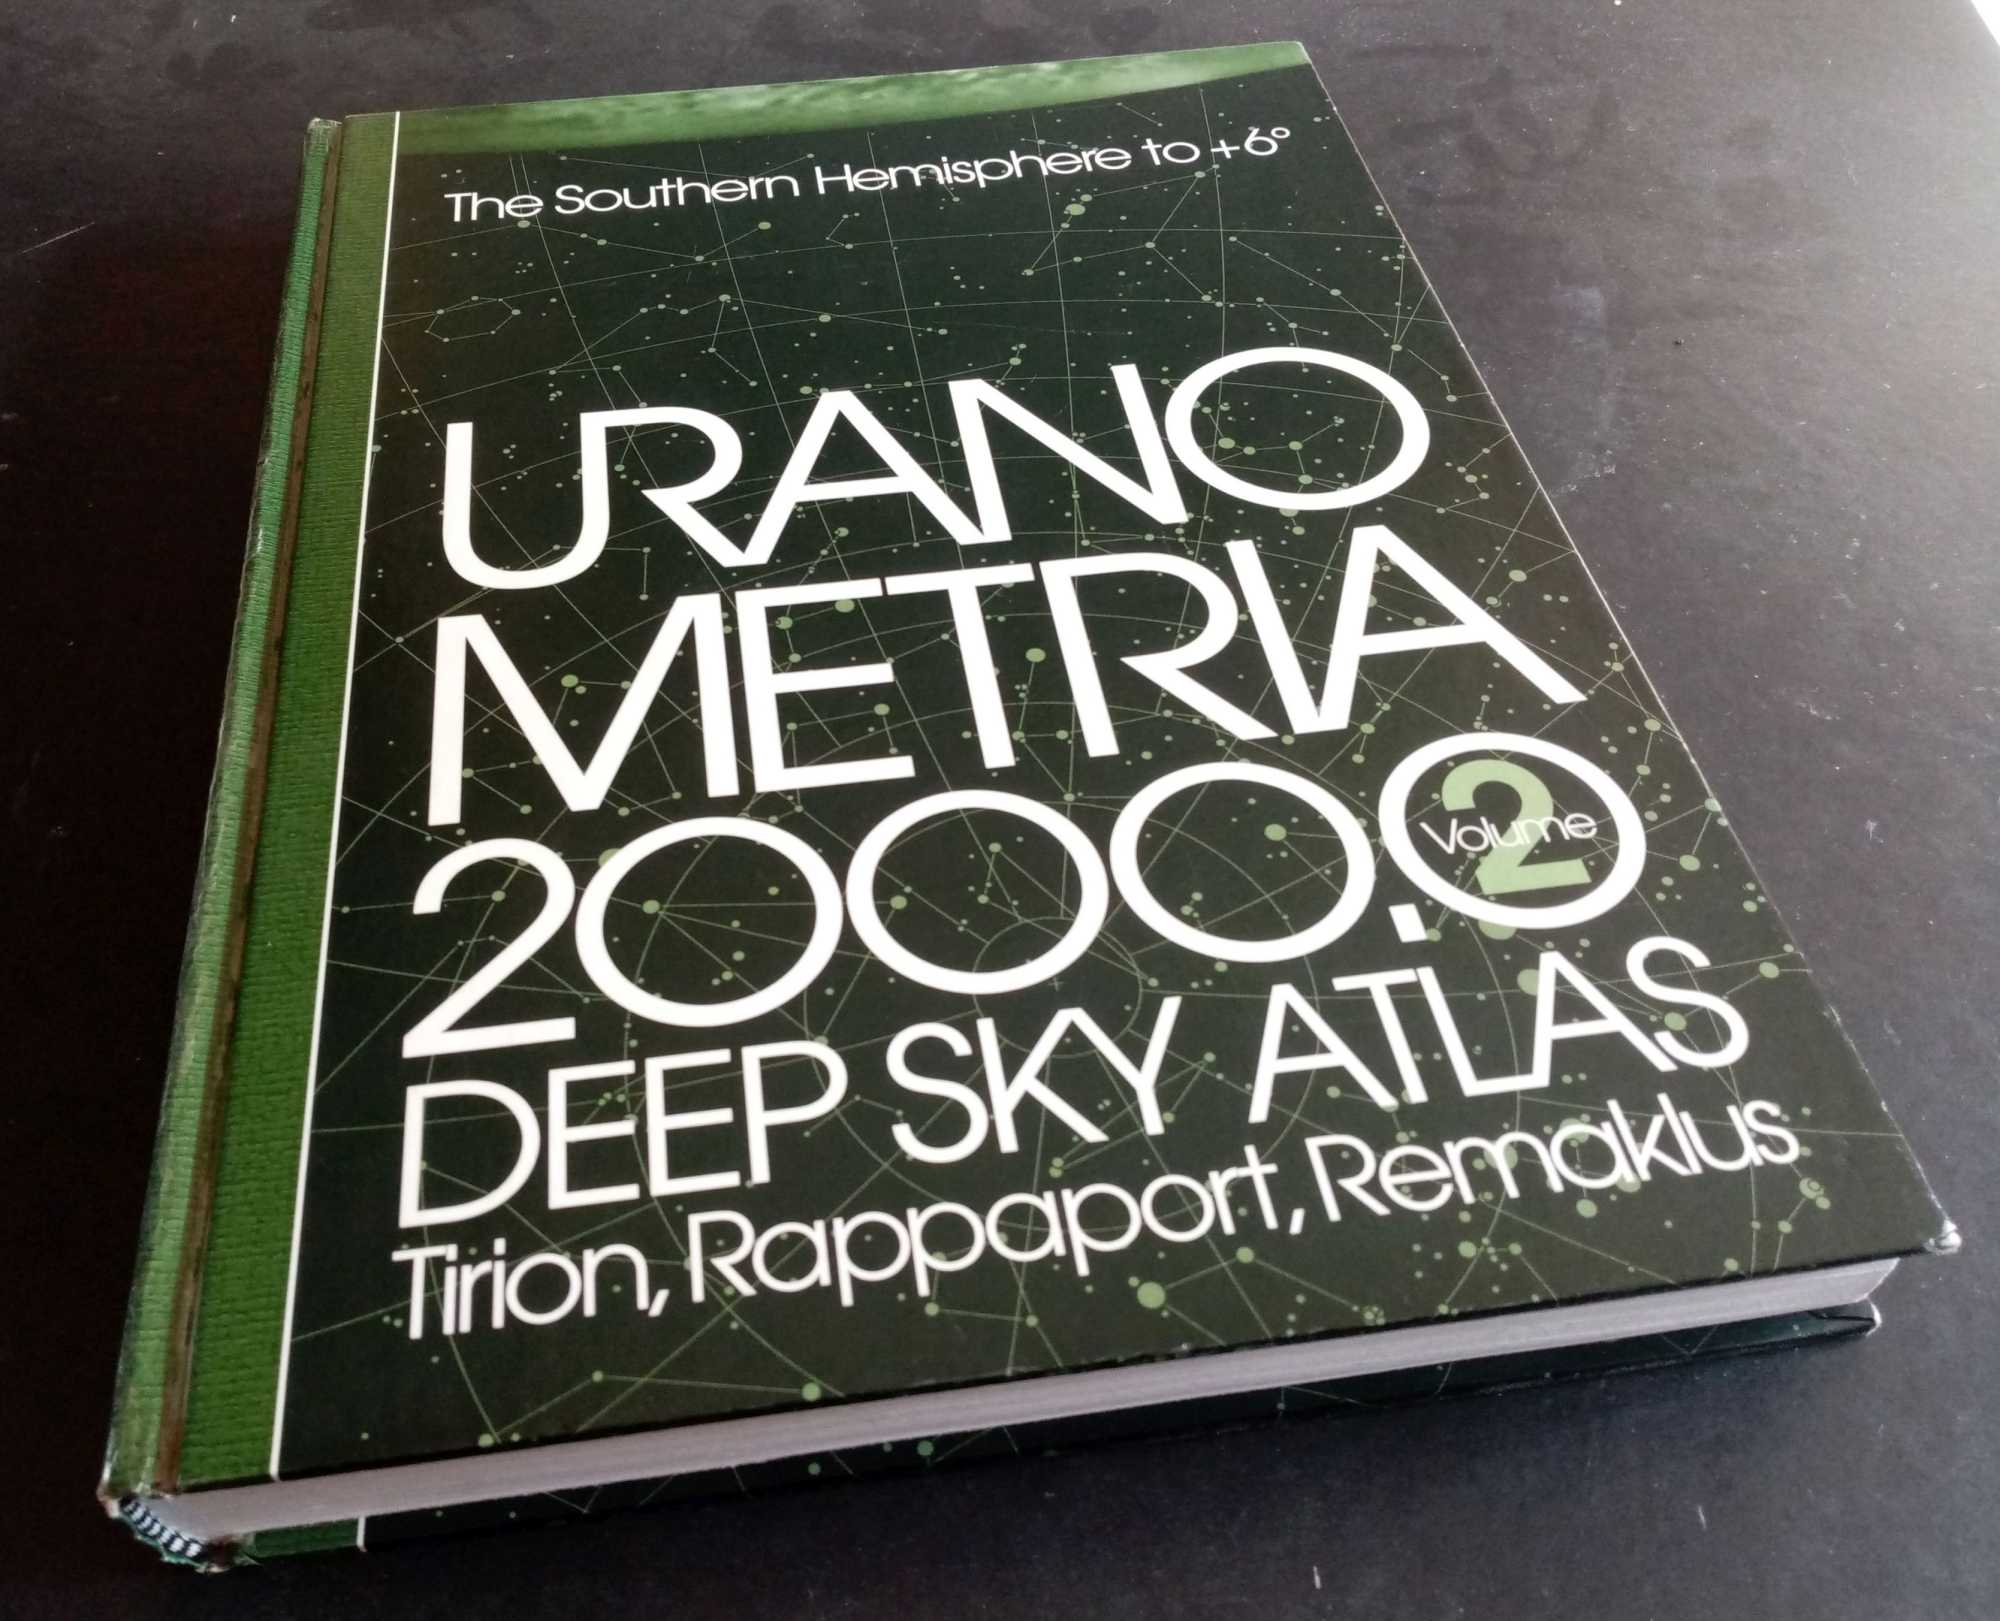 Will Tirion et al, eds. - Uranometria 2000.0: Deep Sky Atlas: Vol 2 The Southern Hemishphere to +6 Degrees